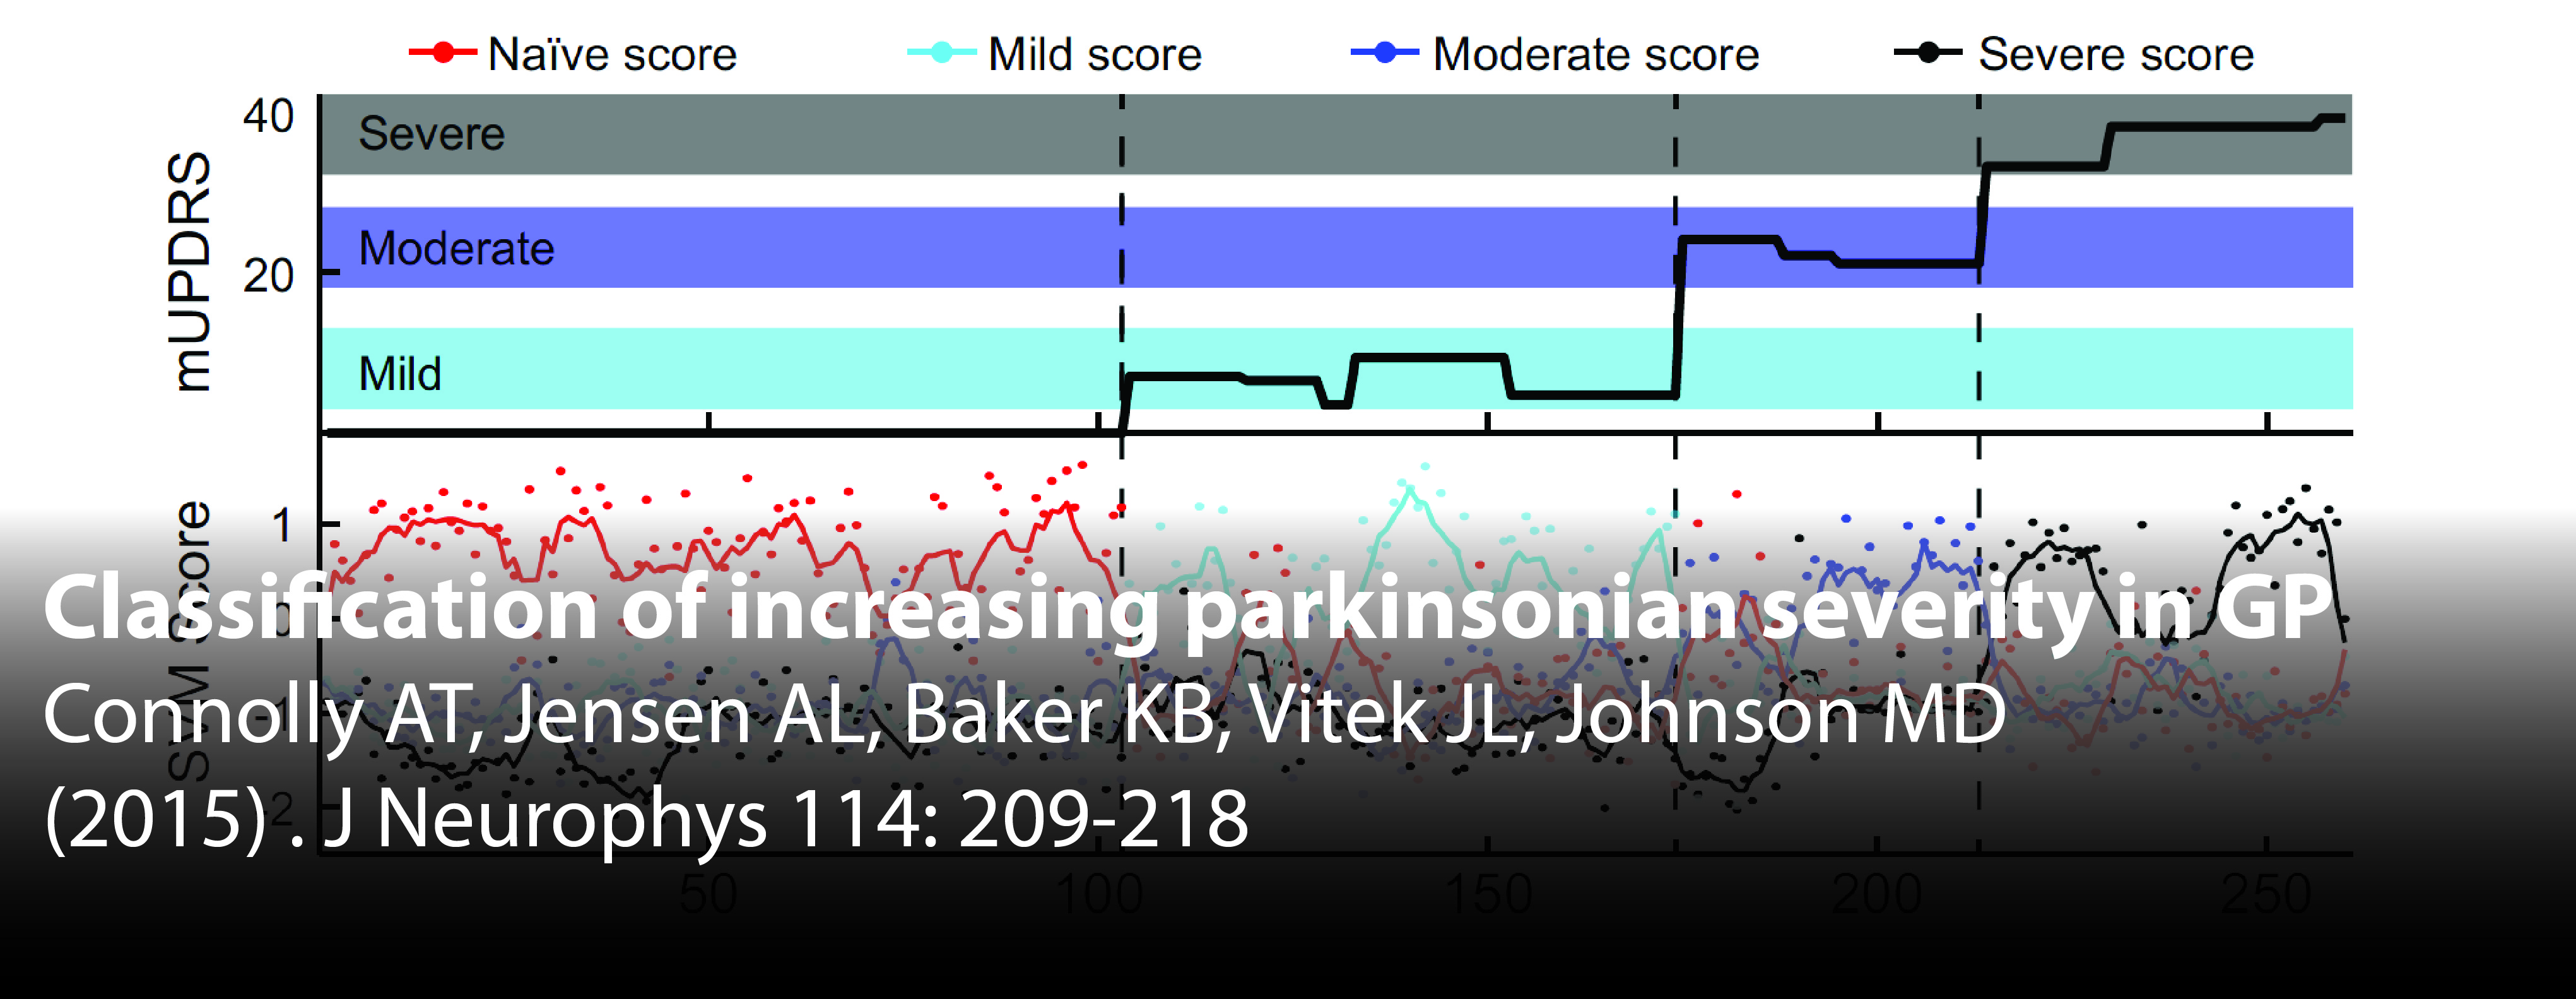 Classification of increasing parkinsonian severity in GP